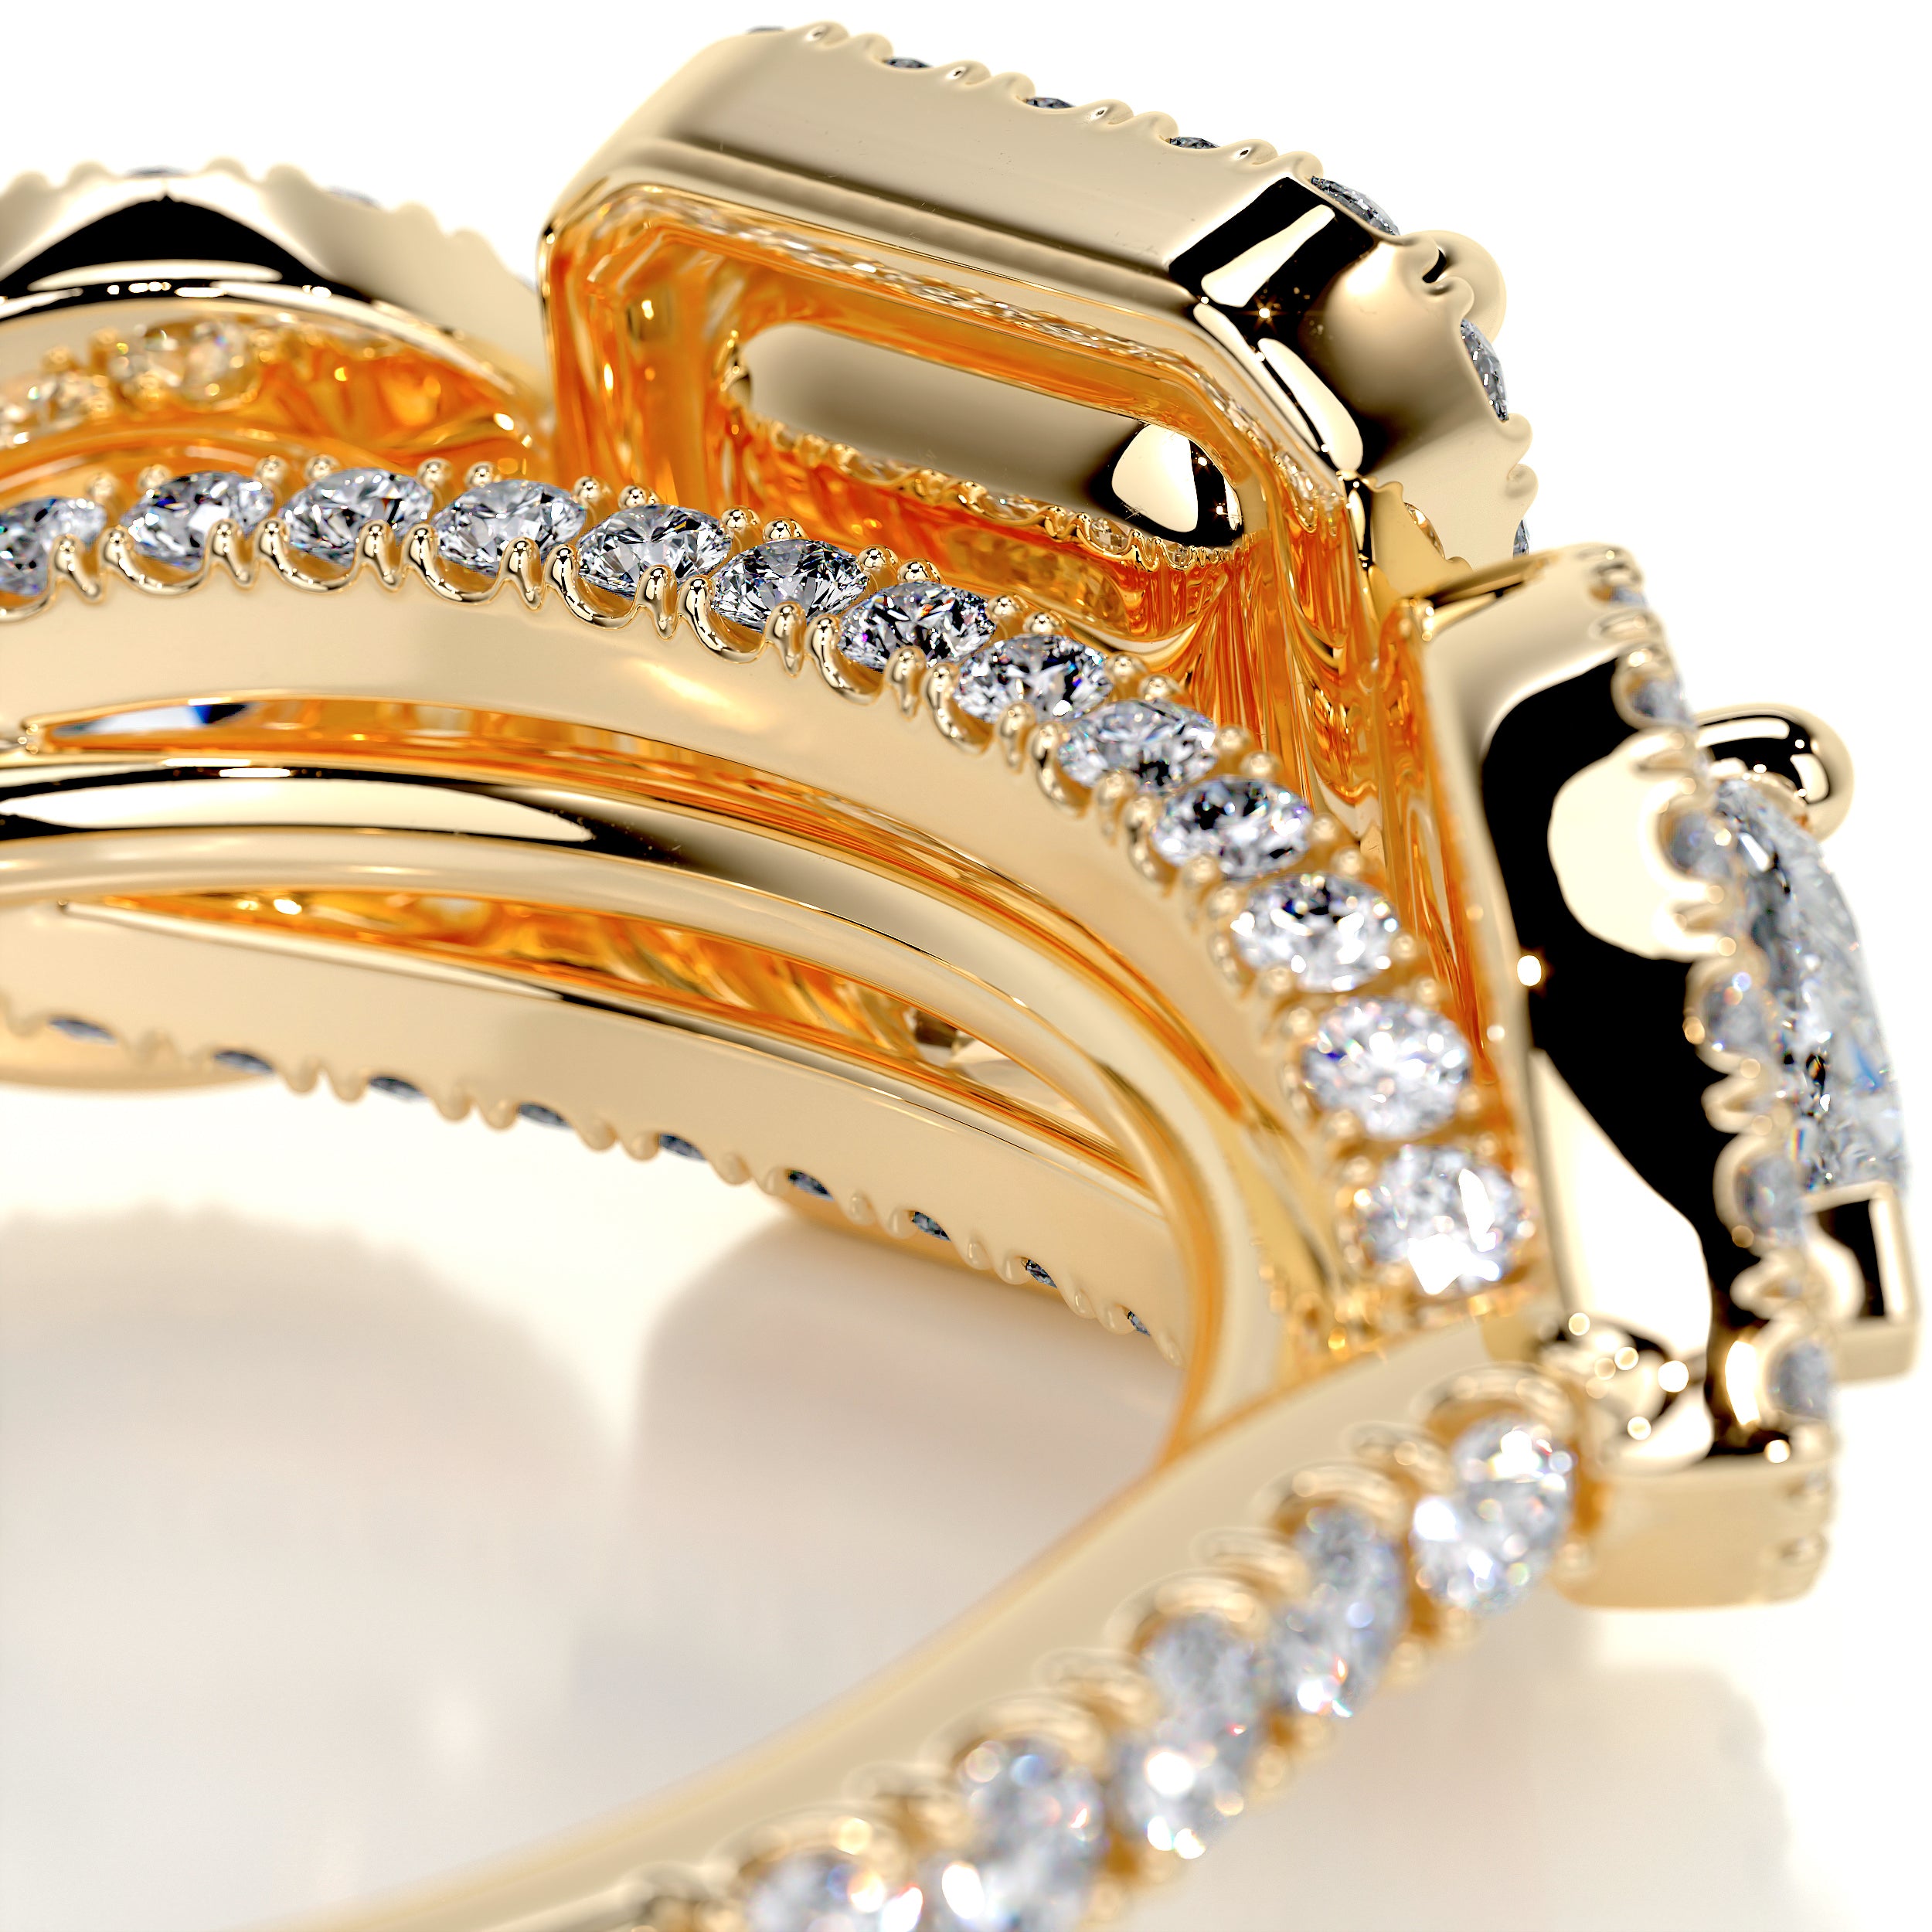 Violet Diamond Engagement Ring   (2.15 Carat) - 18K Yellow Gold